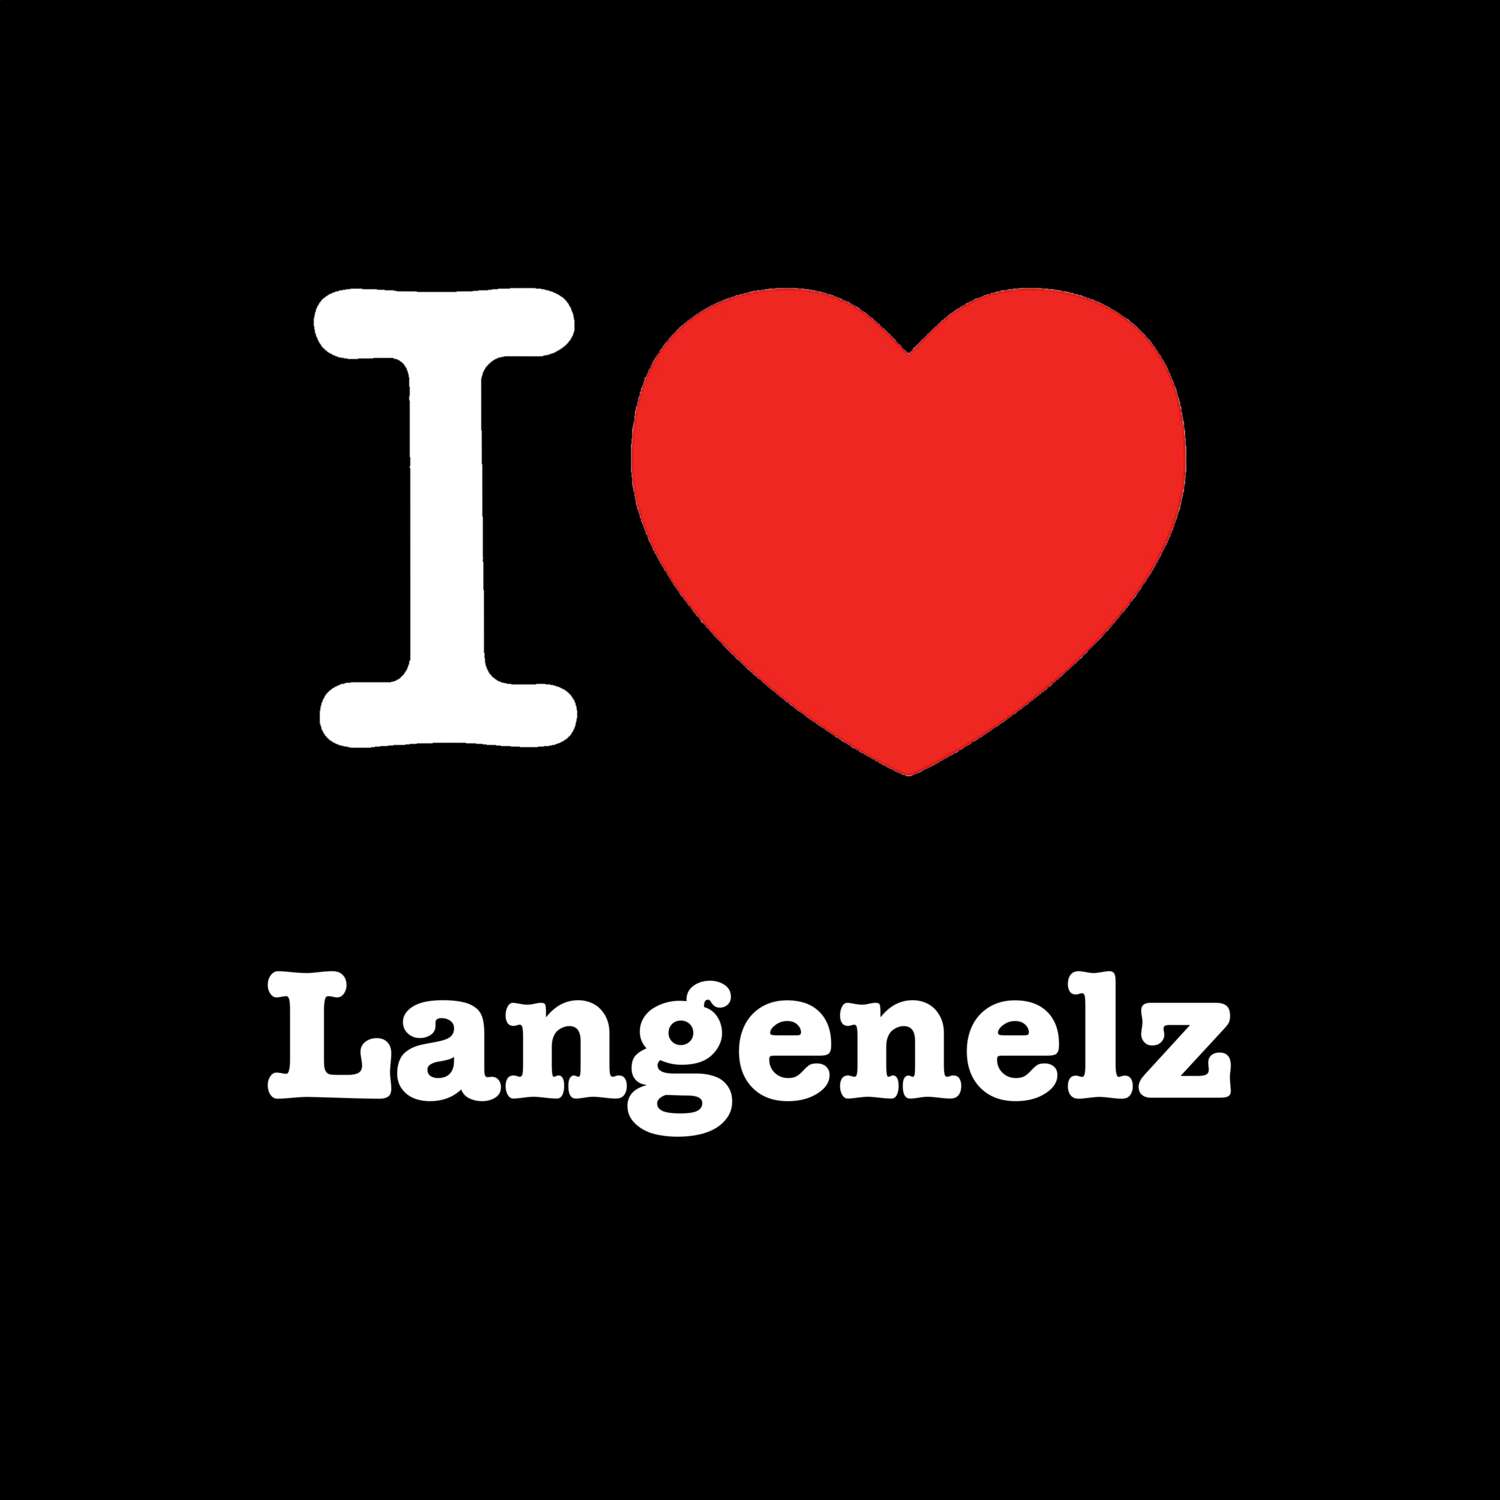 Langenelz T-Shirt »I love«